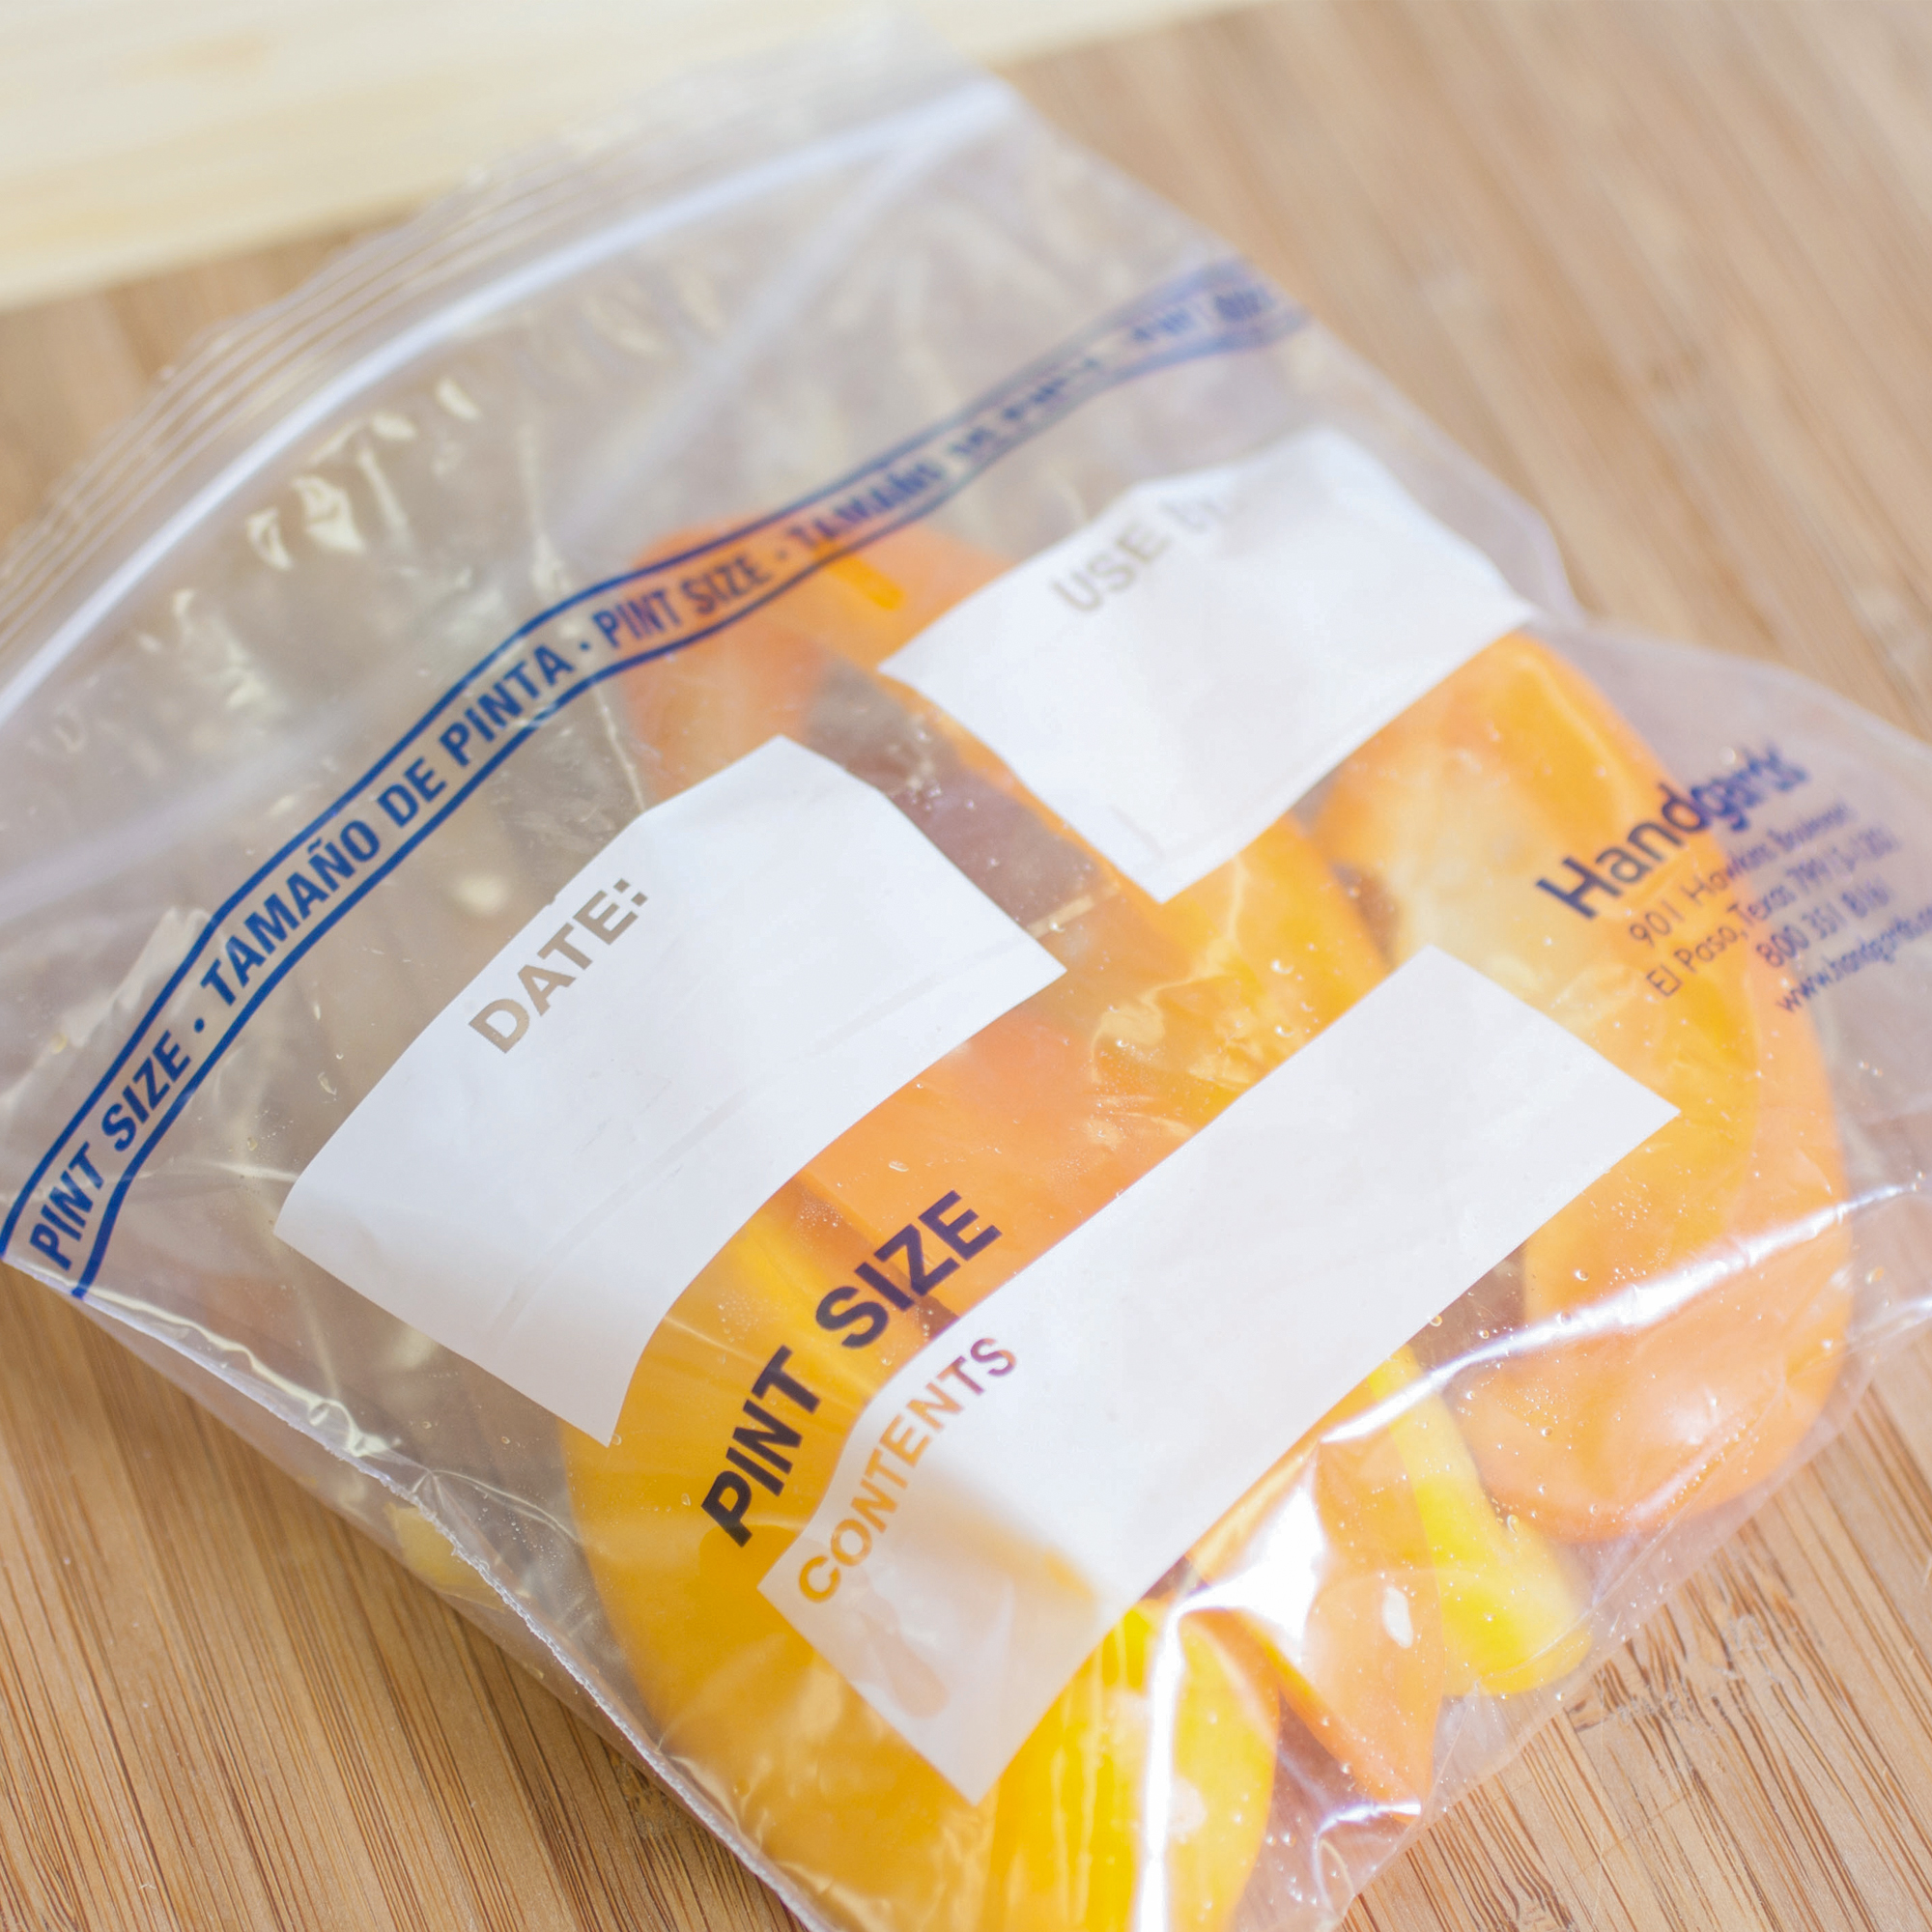 Zipgards® Low Density Freezer Reclosable Disposable Bags – Pint